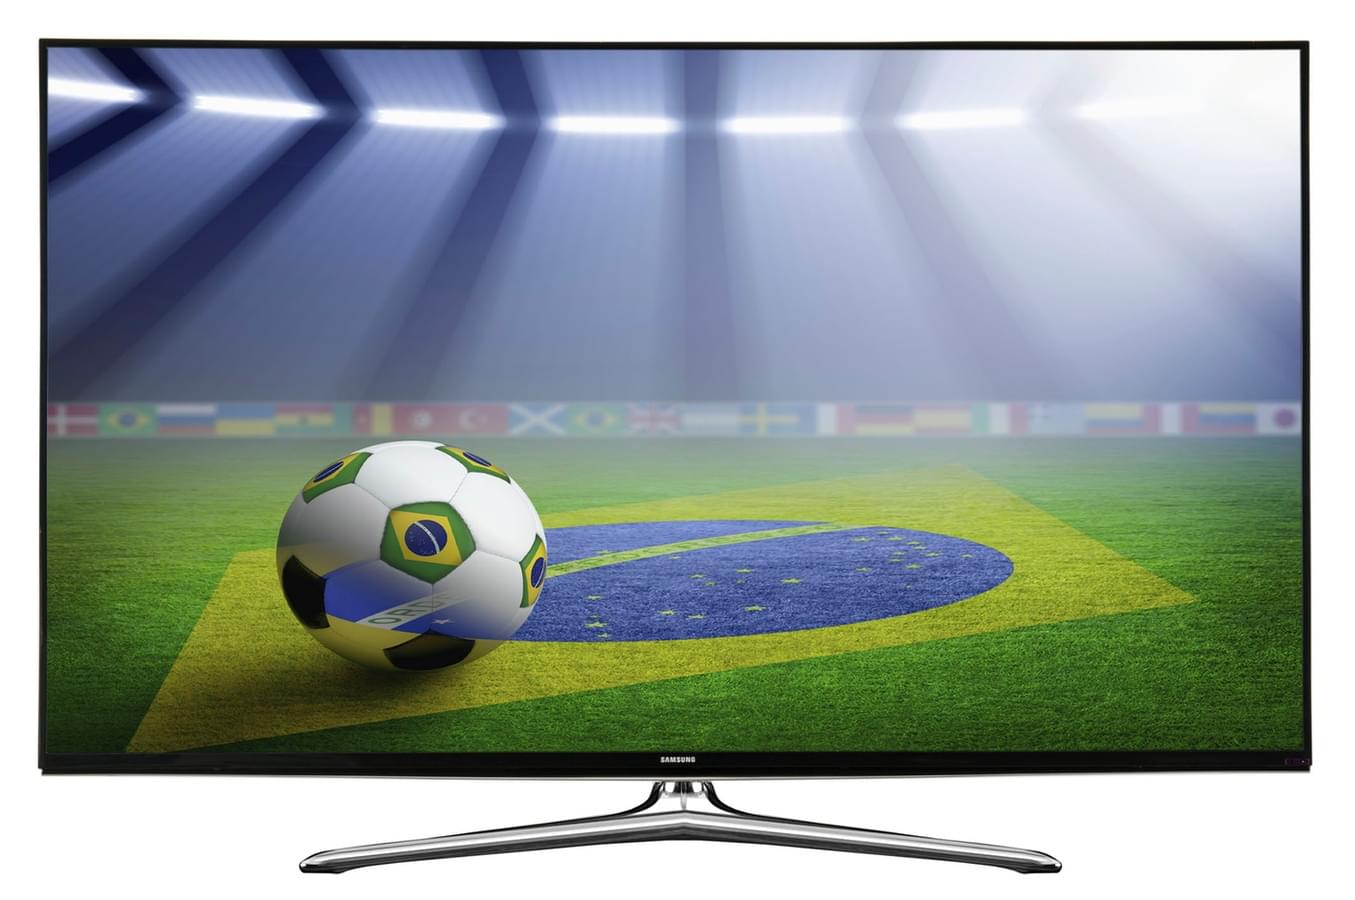 TV Samsung UE50H6200 - 50" (127cm) LED HDTV 1080p 3D 200Hz